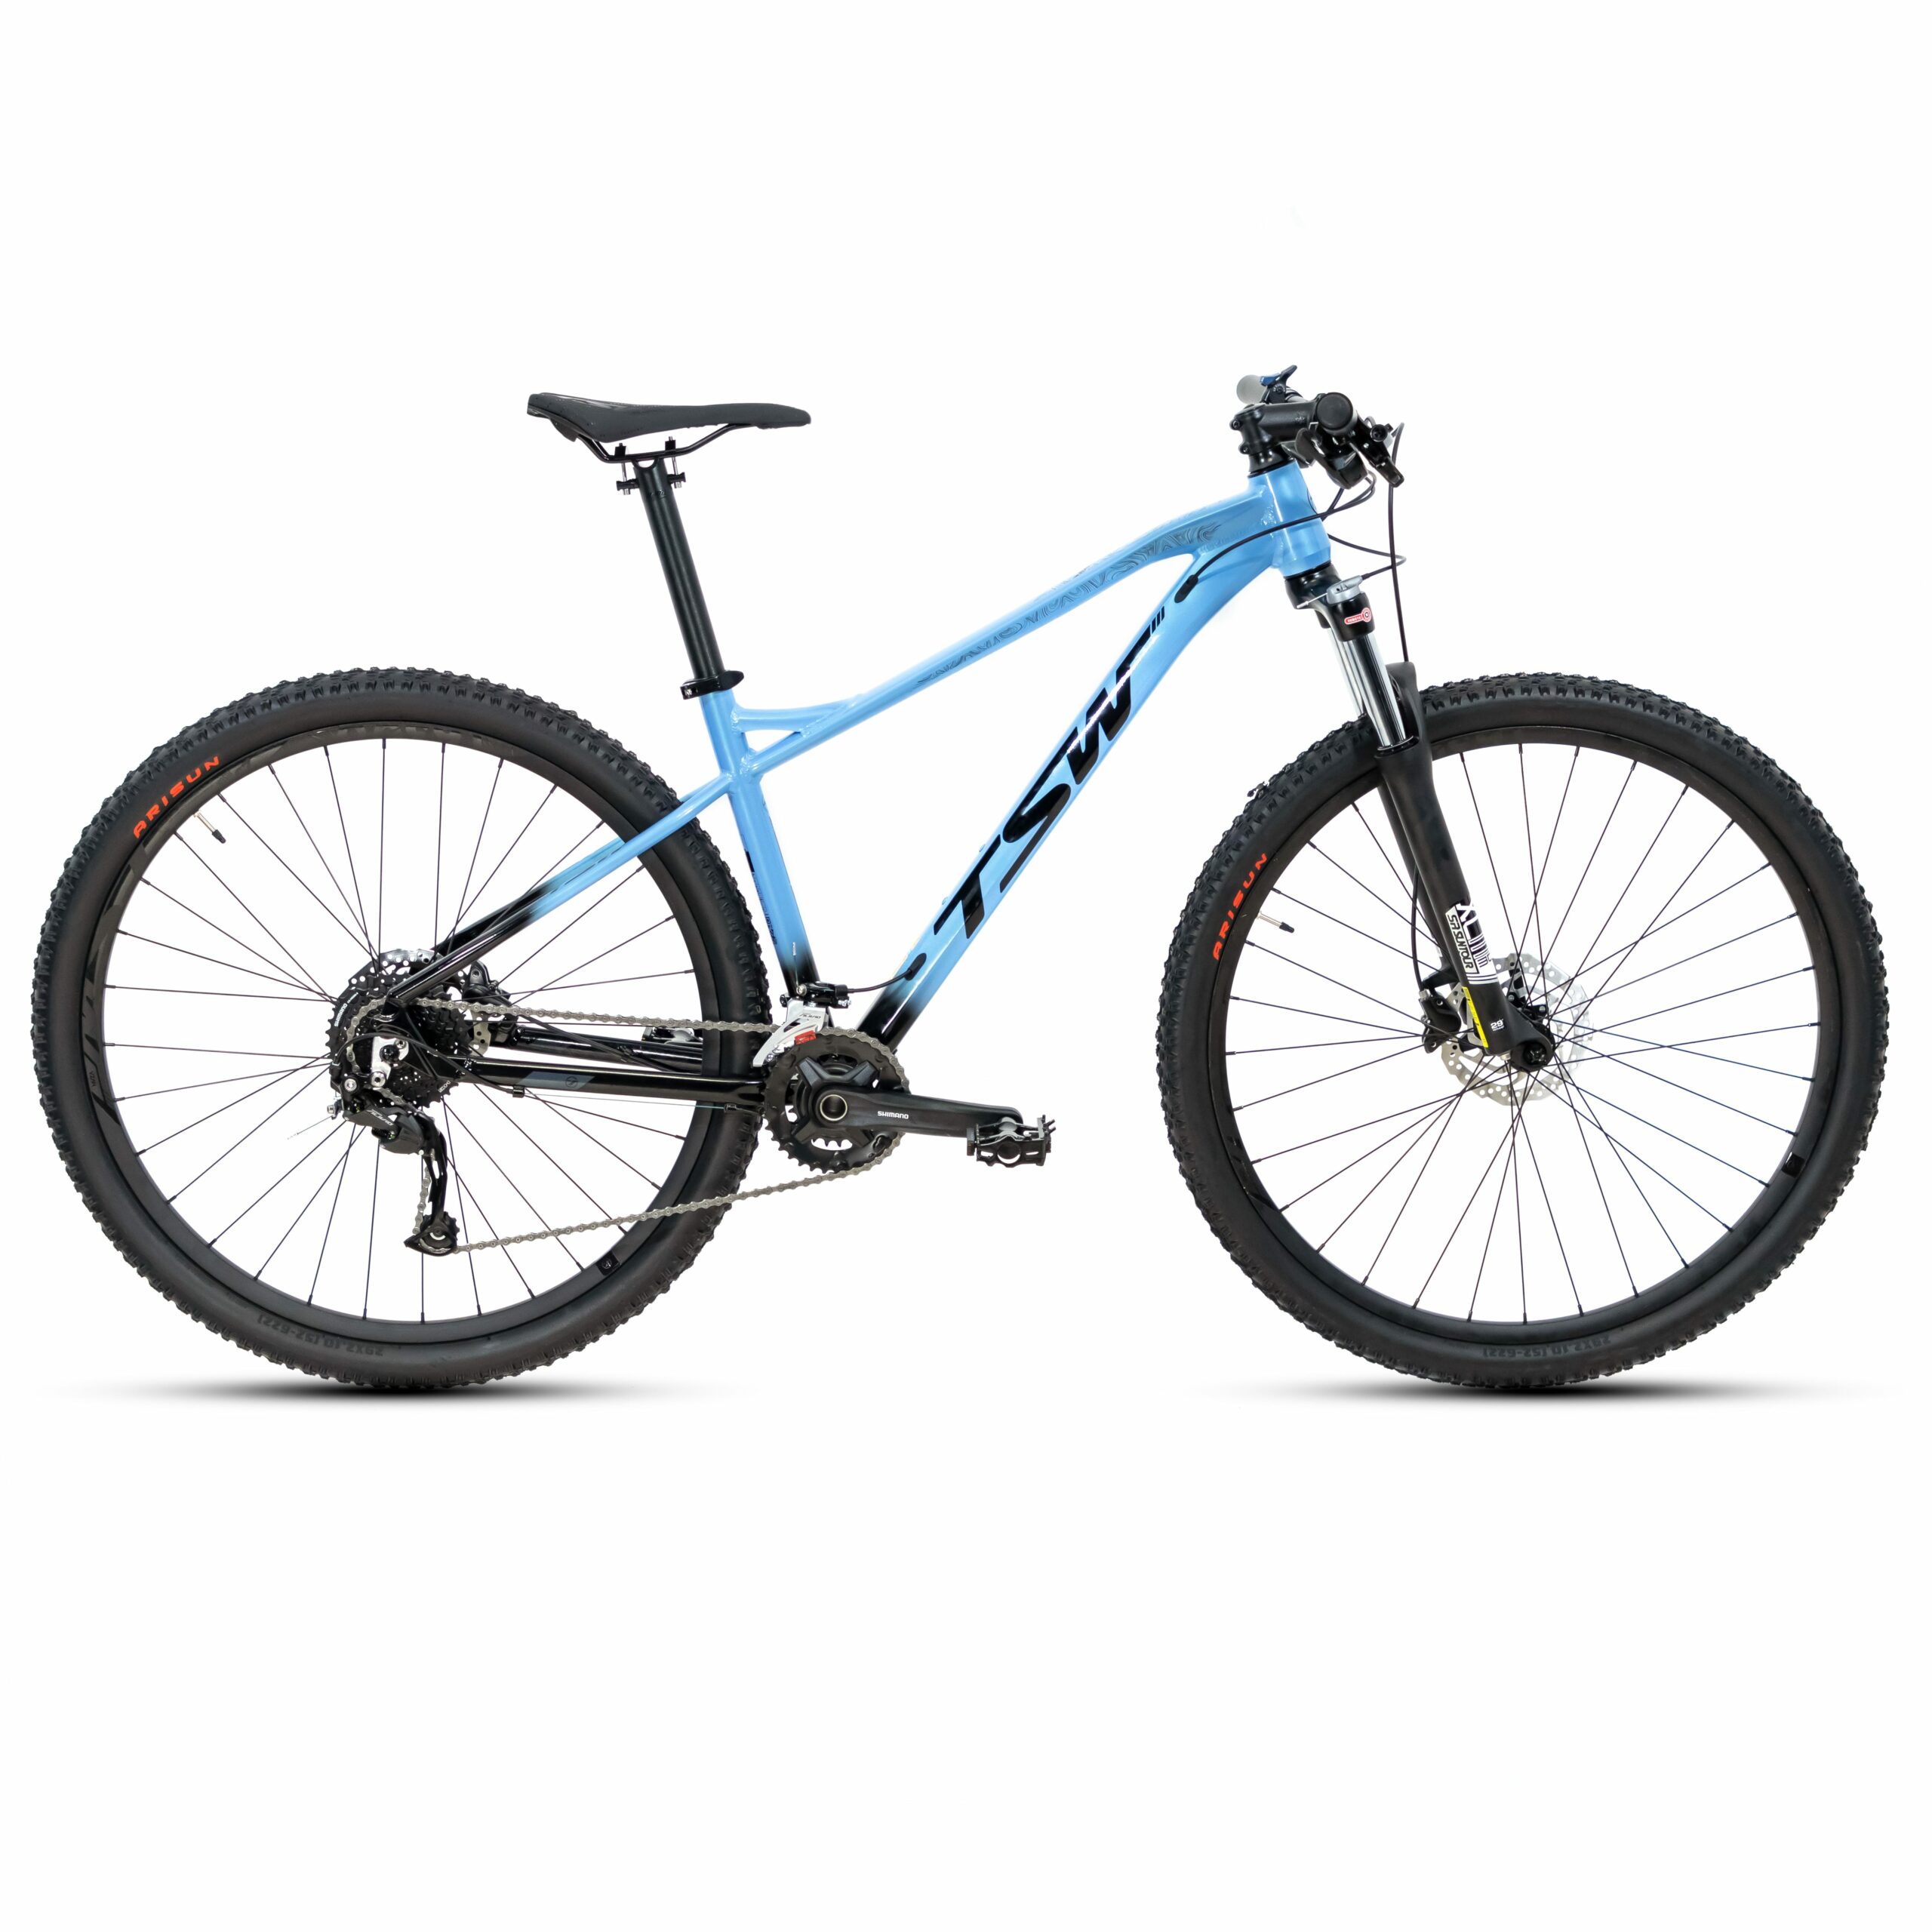 Bicicleta TSW Stamina | 2021/2022 - 15.5", Azul Claro/Preto